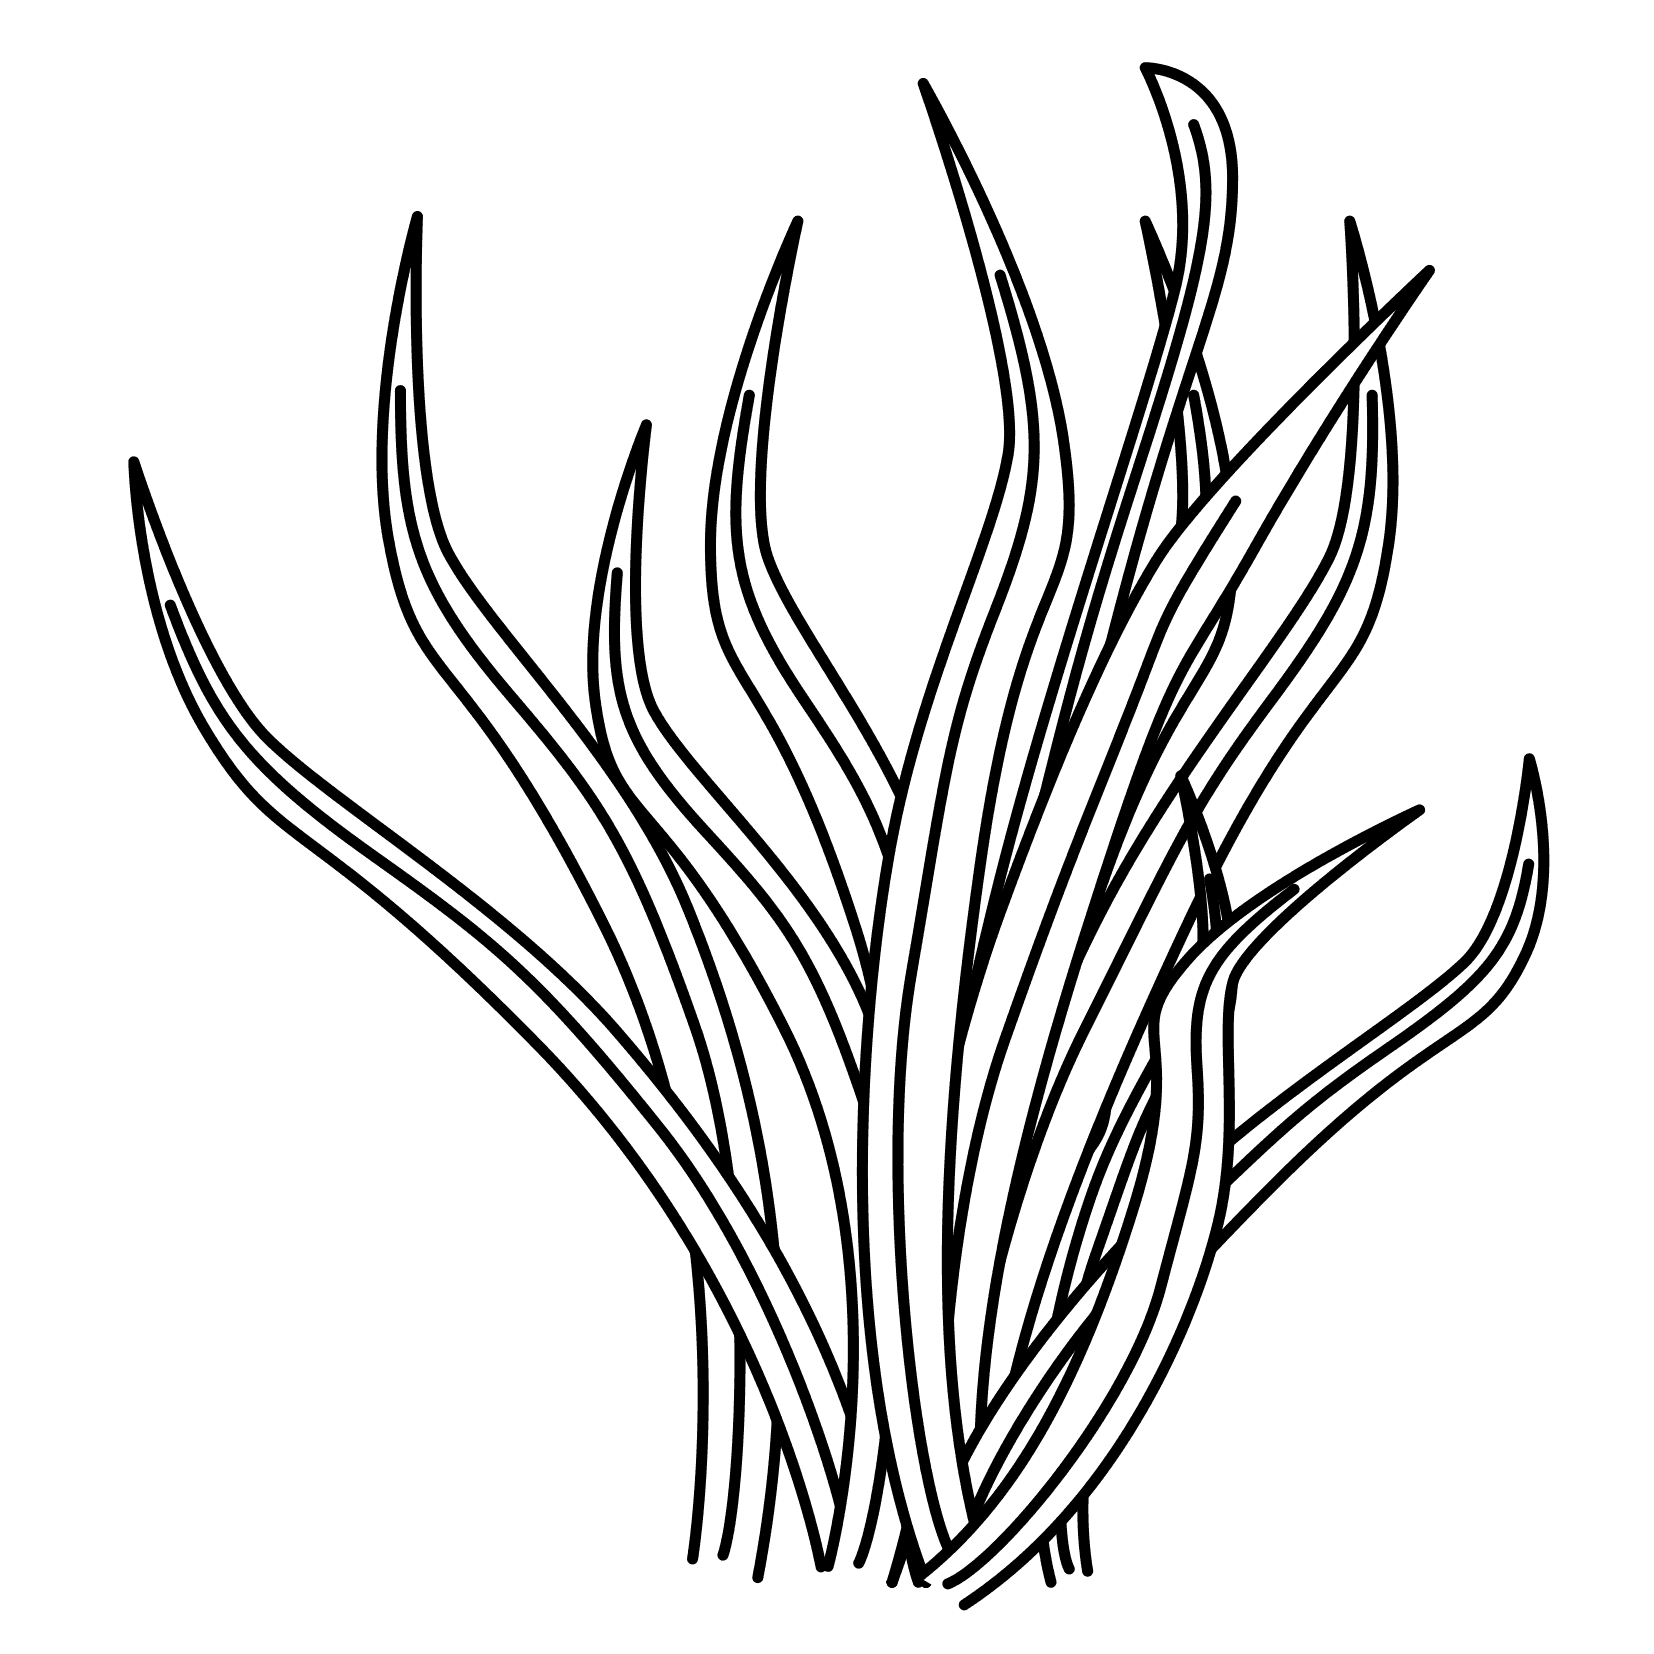 Grass Drawing